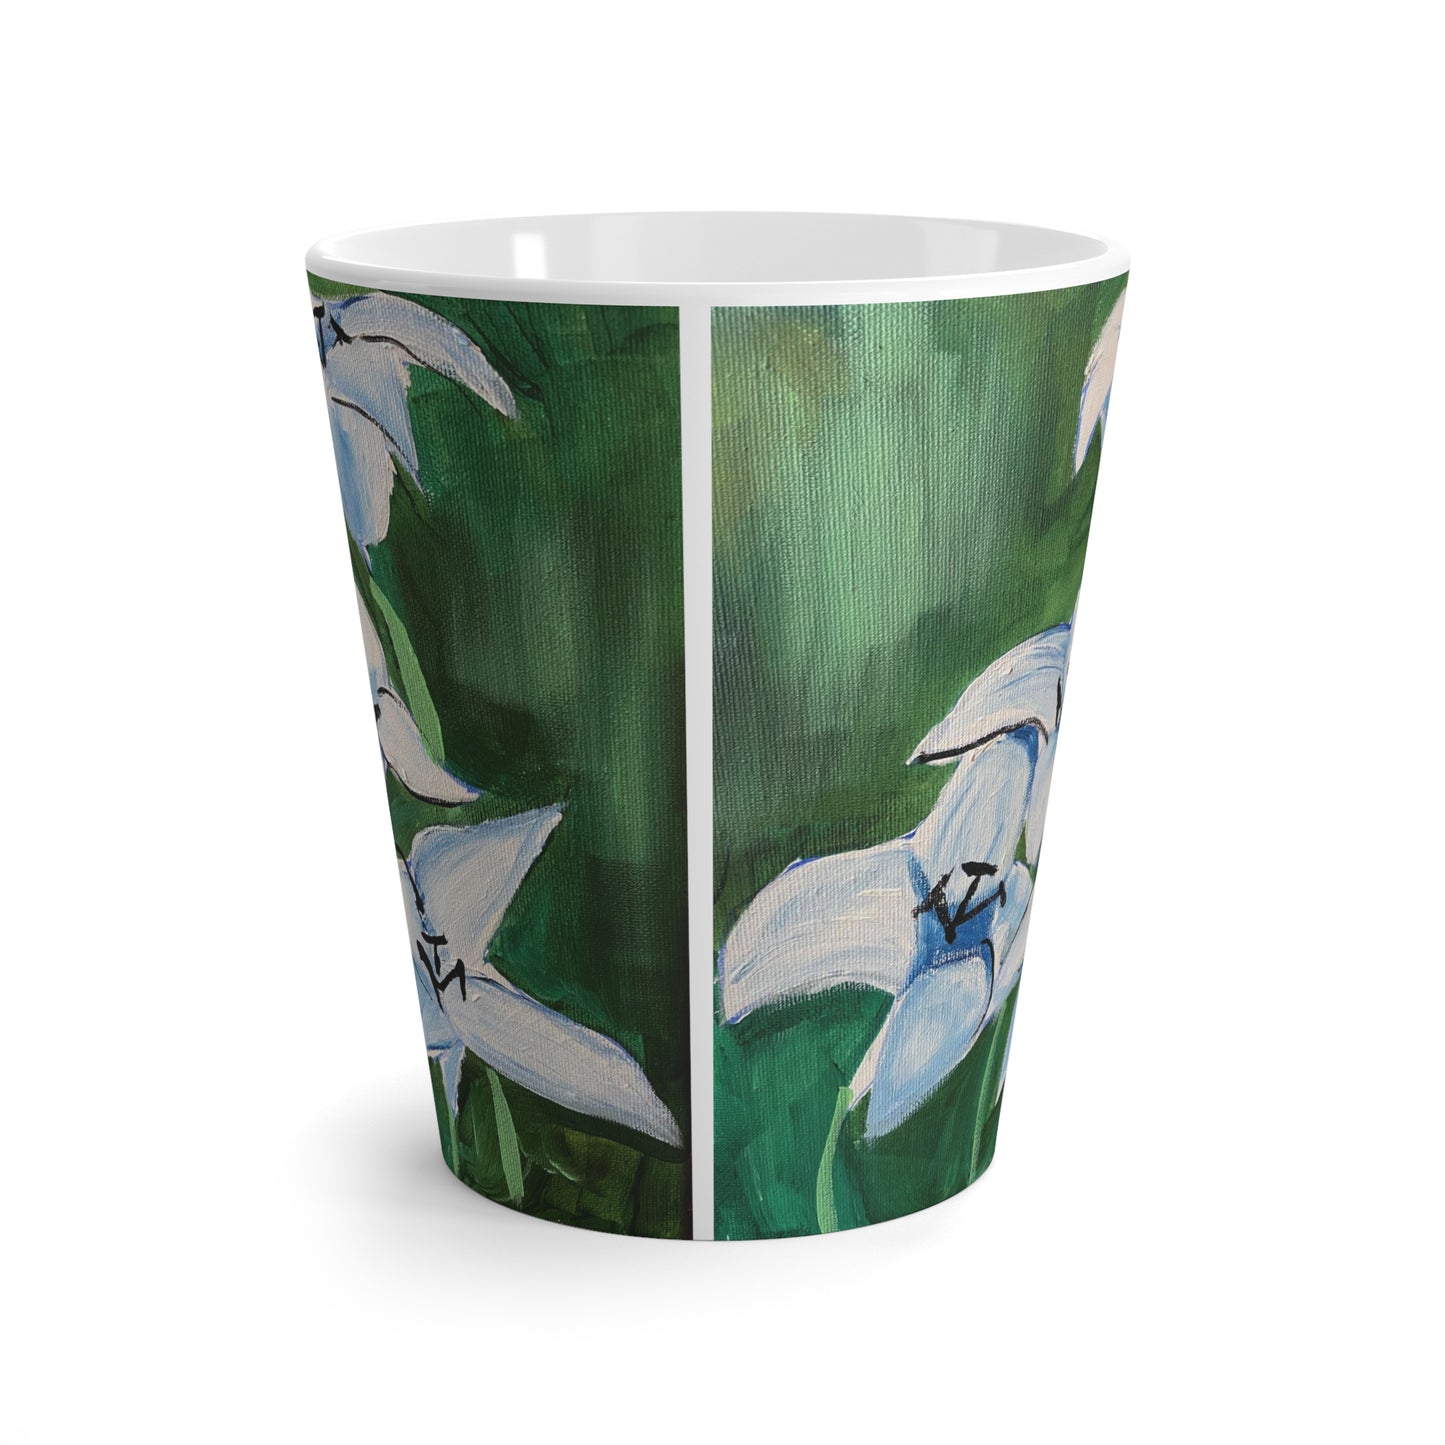 Lilies in Blue Latte Mug